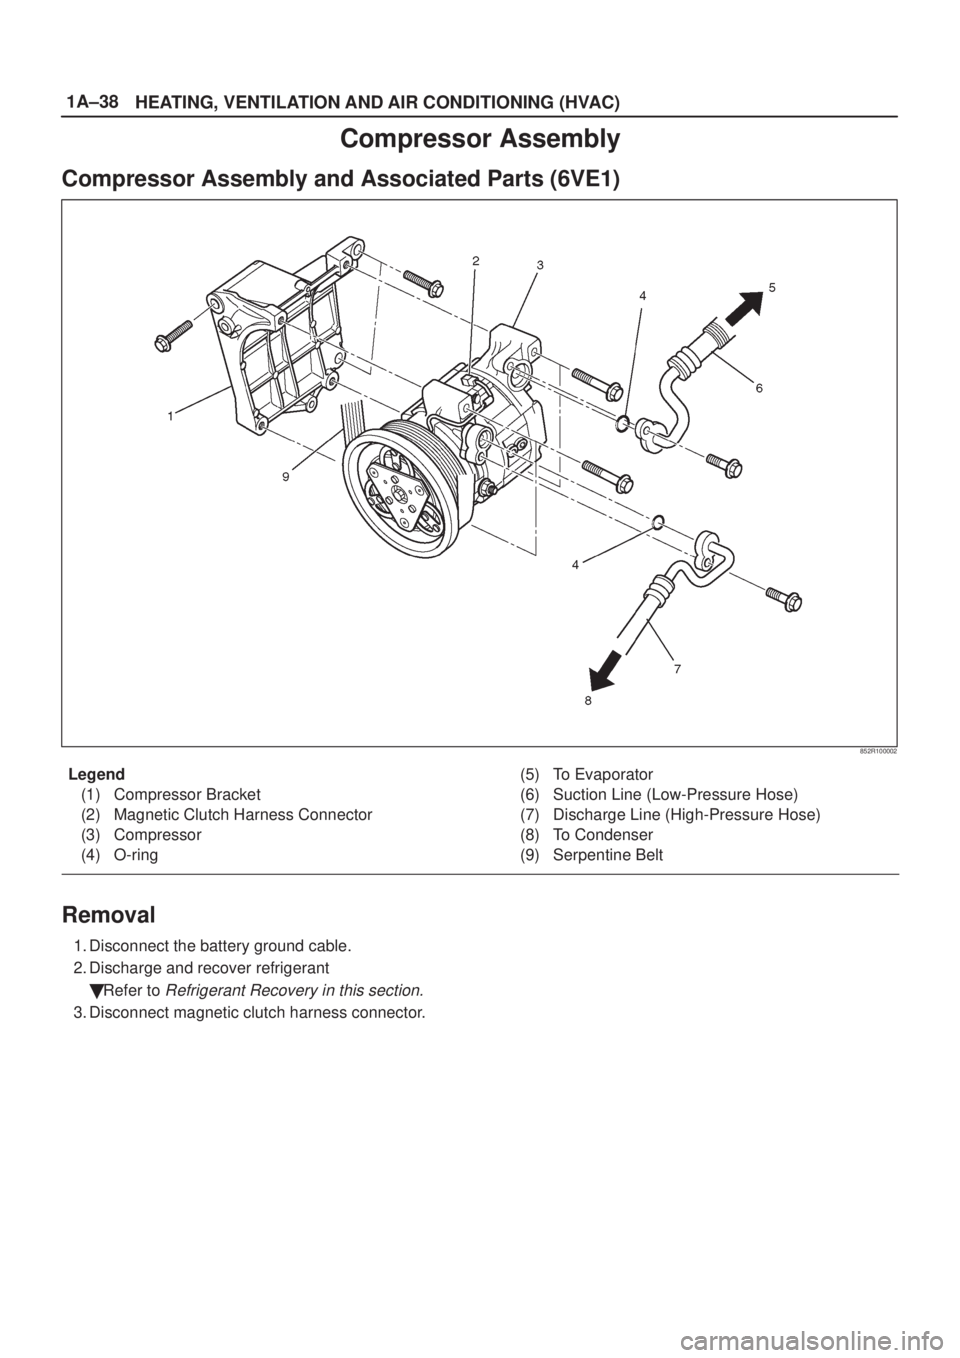 ISUZU AXIOM 2002  Service Repair Manual 1A±38
HEATING, VENTILATION AND AIR CONDITIONING (HVAC)
Compressor Assembly
Compressor Assembly and Associated Parts (6VE1)
852R100002
Legend
(1) Compressor Bracket
(2) Magnetic Clutch Harness Connect